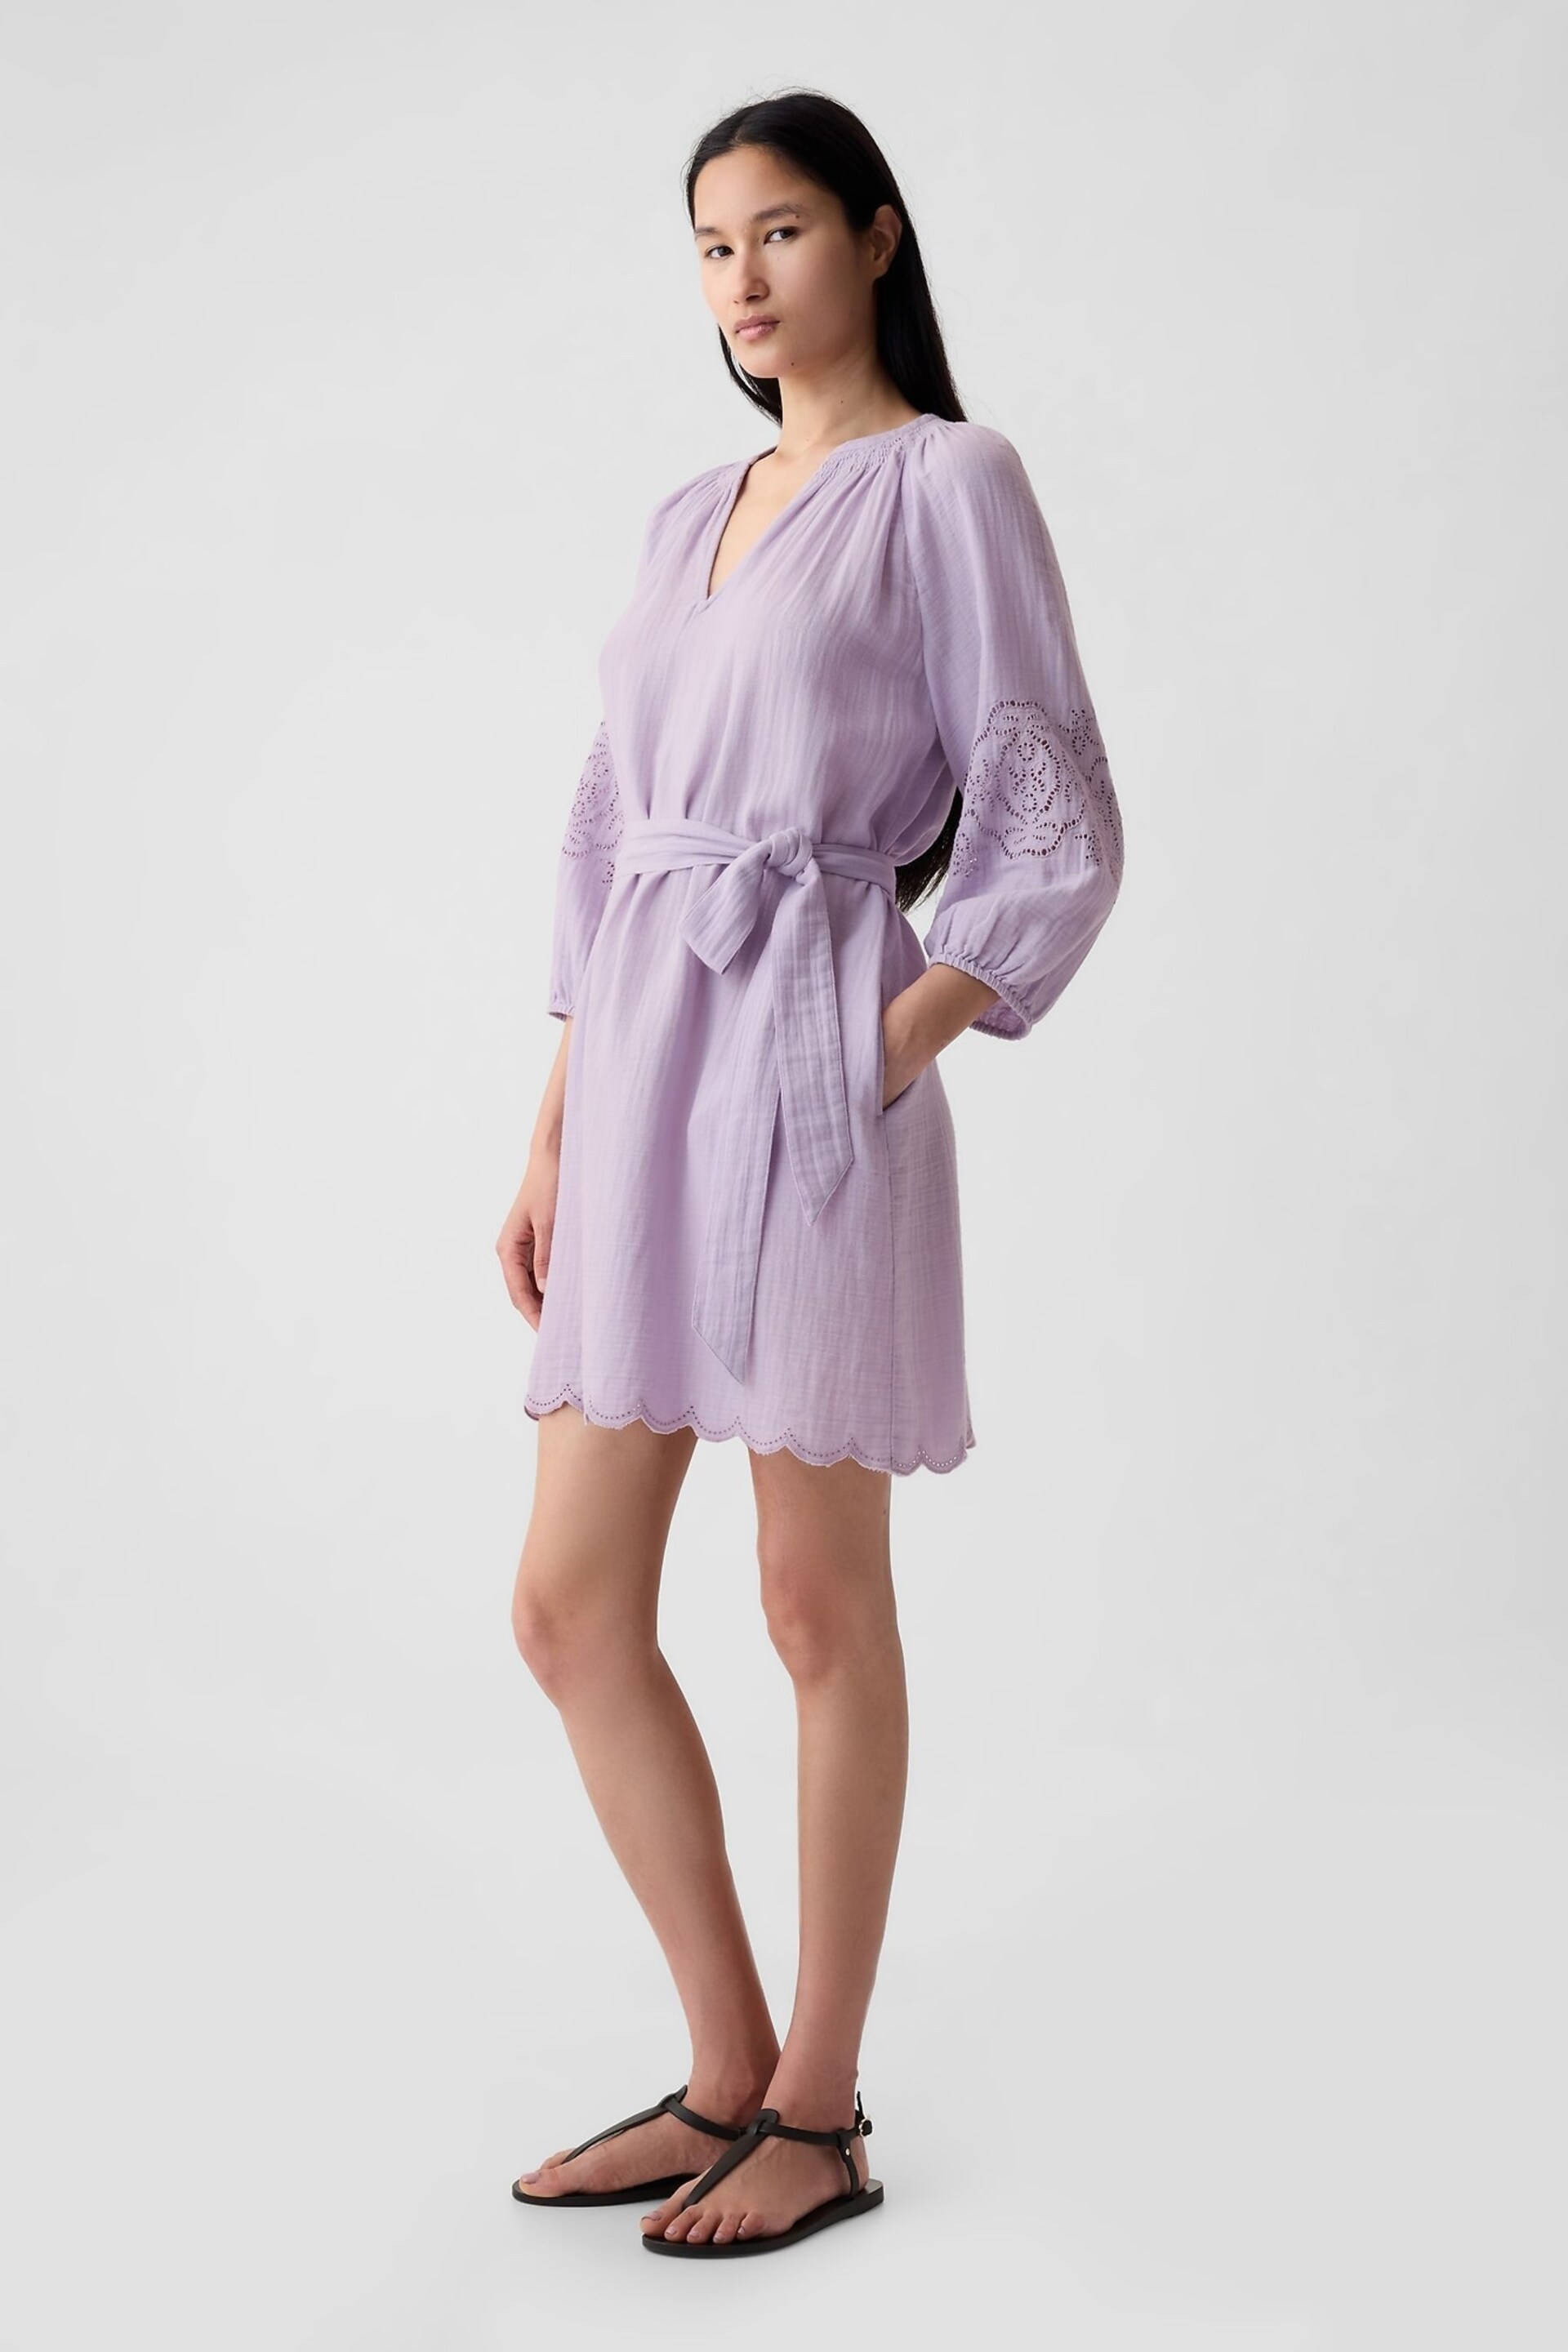 Gap Purple Crinkle Cotton Embroidered Elbow Sleeve Mini Dress - Image 3 of 3